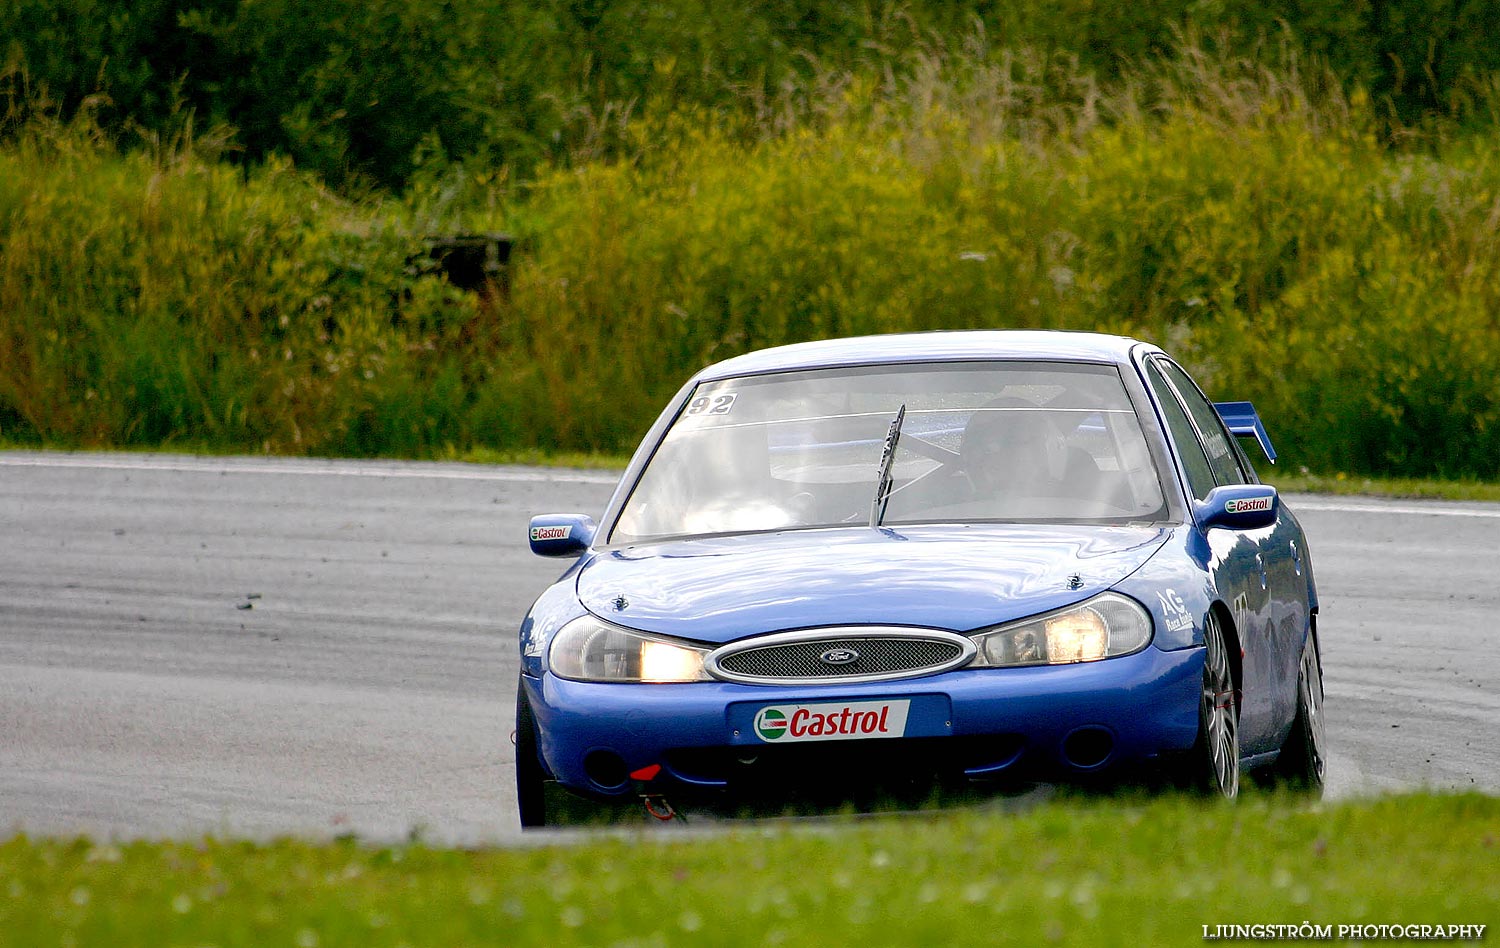 SSK Raceweek,mix,Kinnekulle Ring,Götene,Sverige,Motorsport,,2004,92422